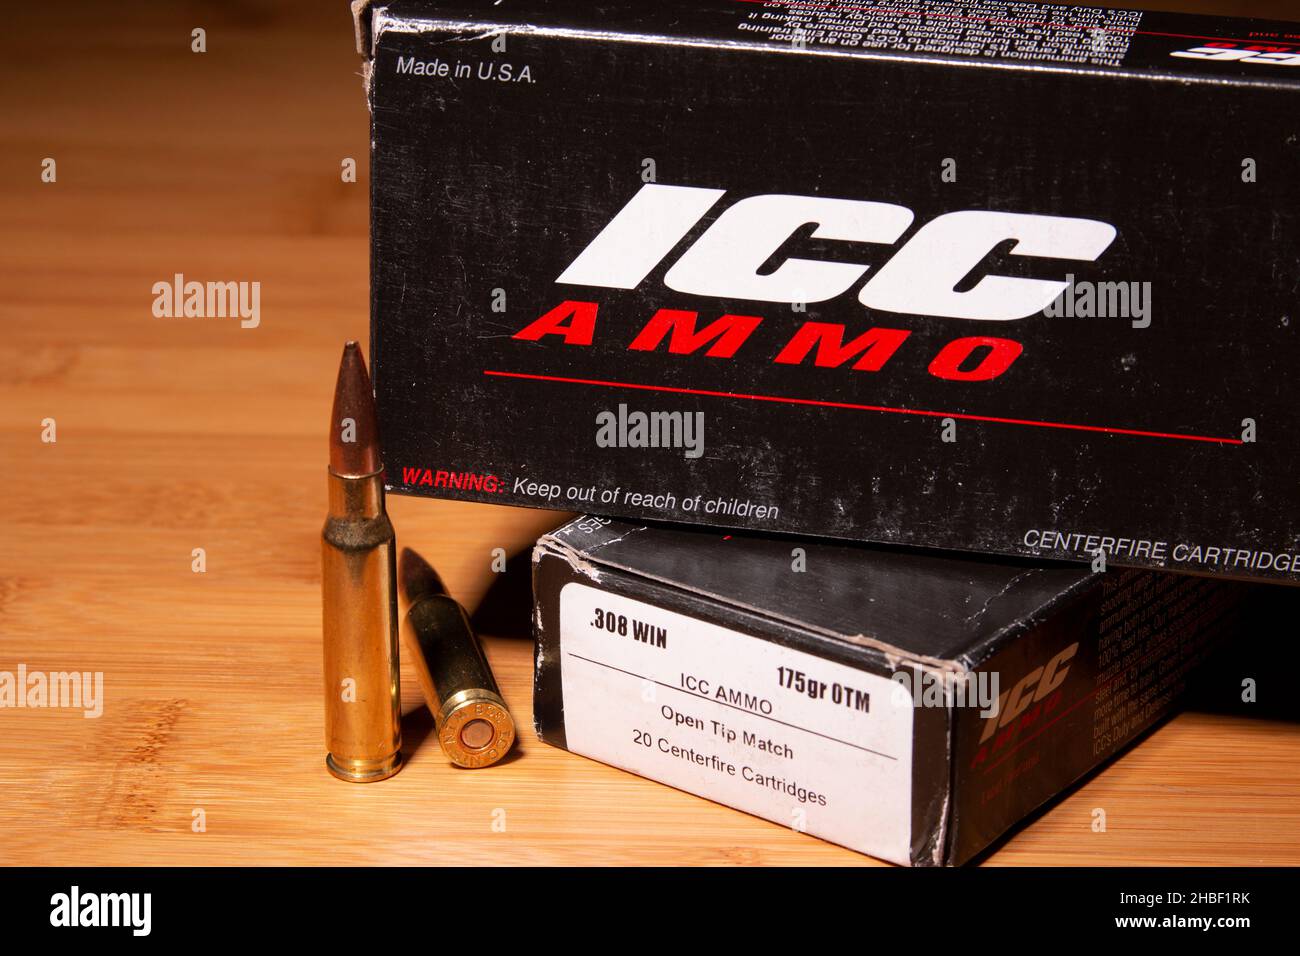 ICC Ammo .233 Ammunition Stock Photo